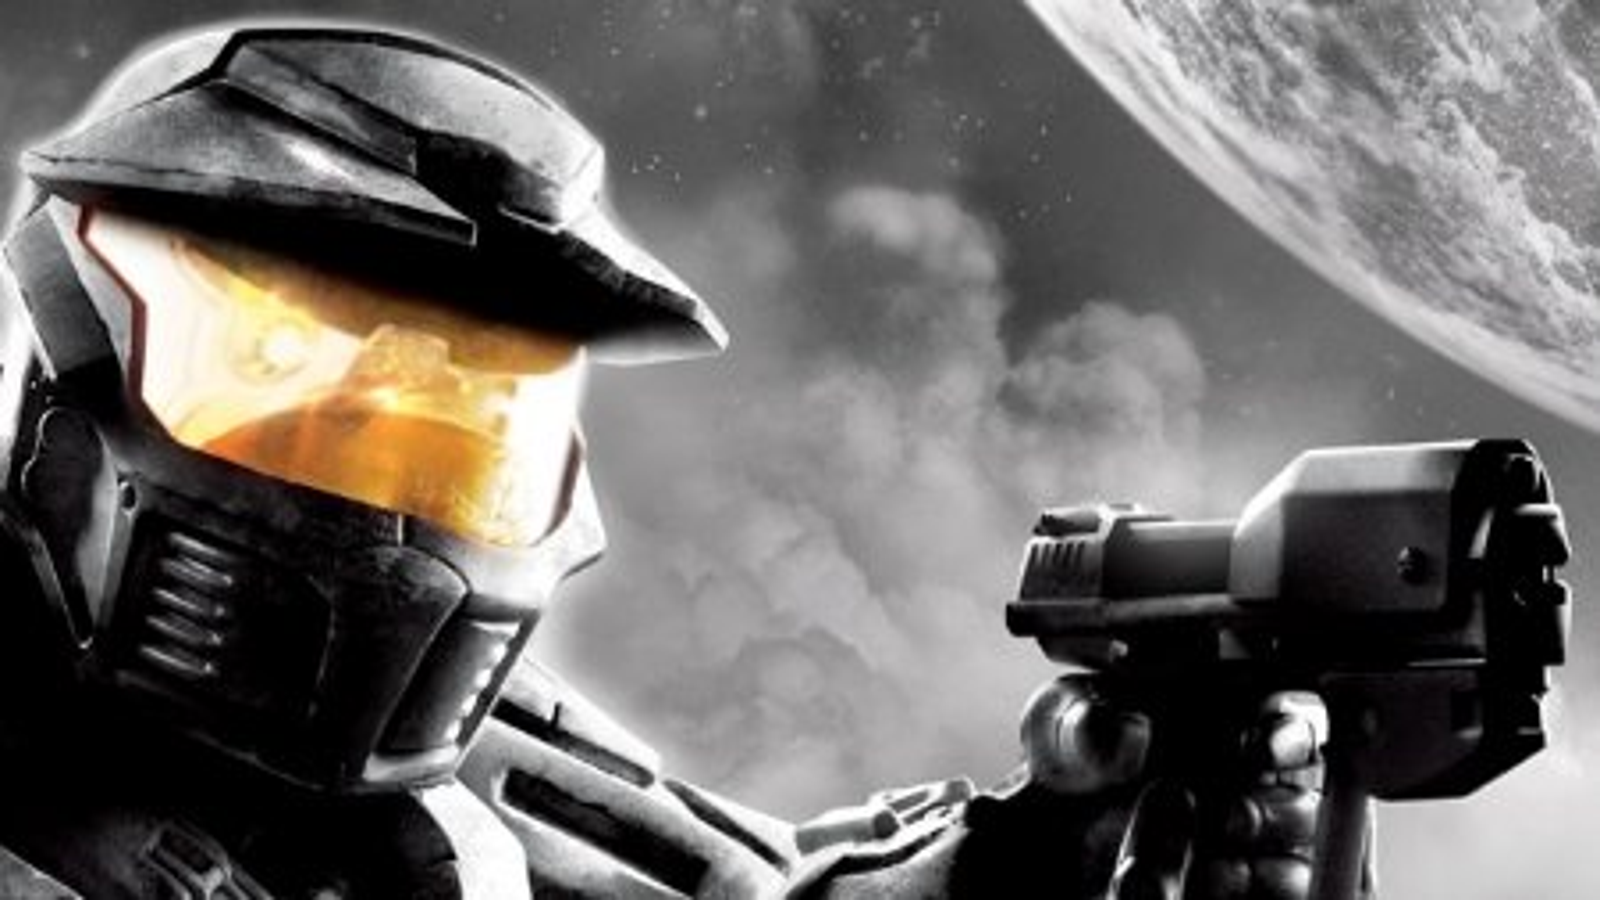 Buy Halo: Combat Evolved Anniversary